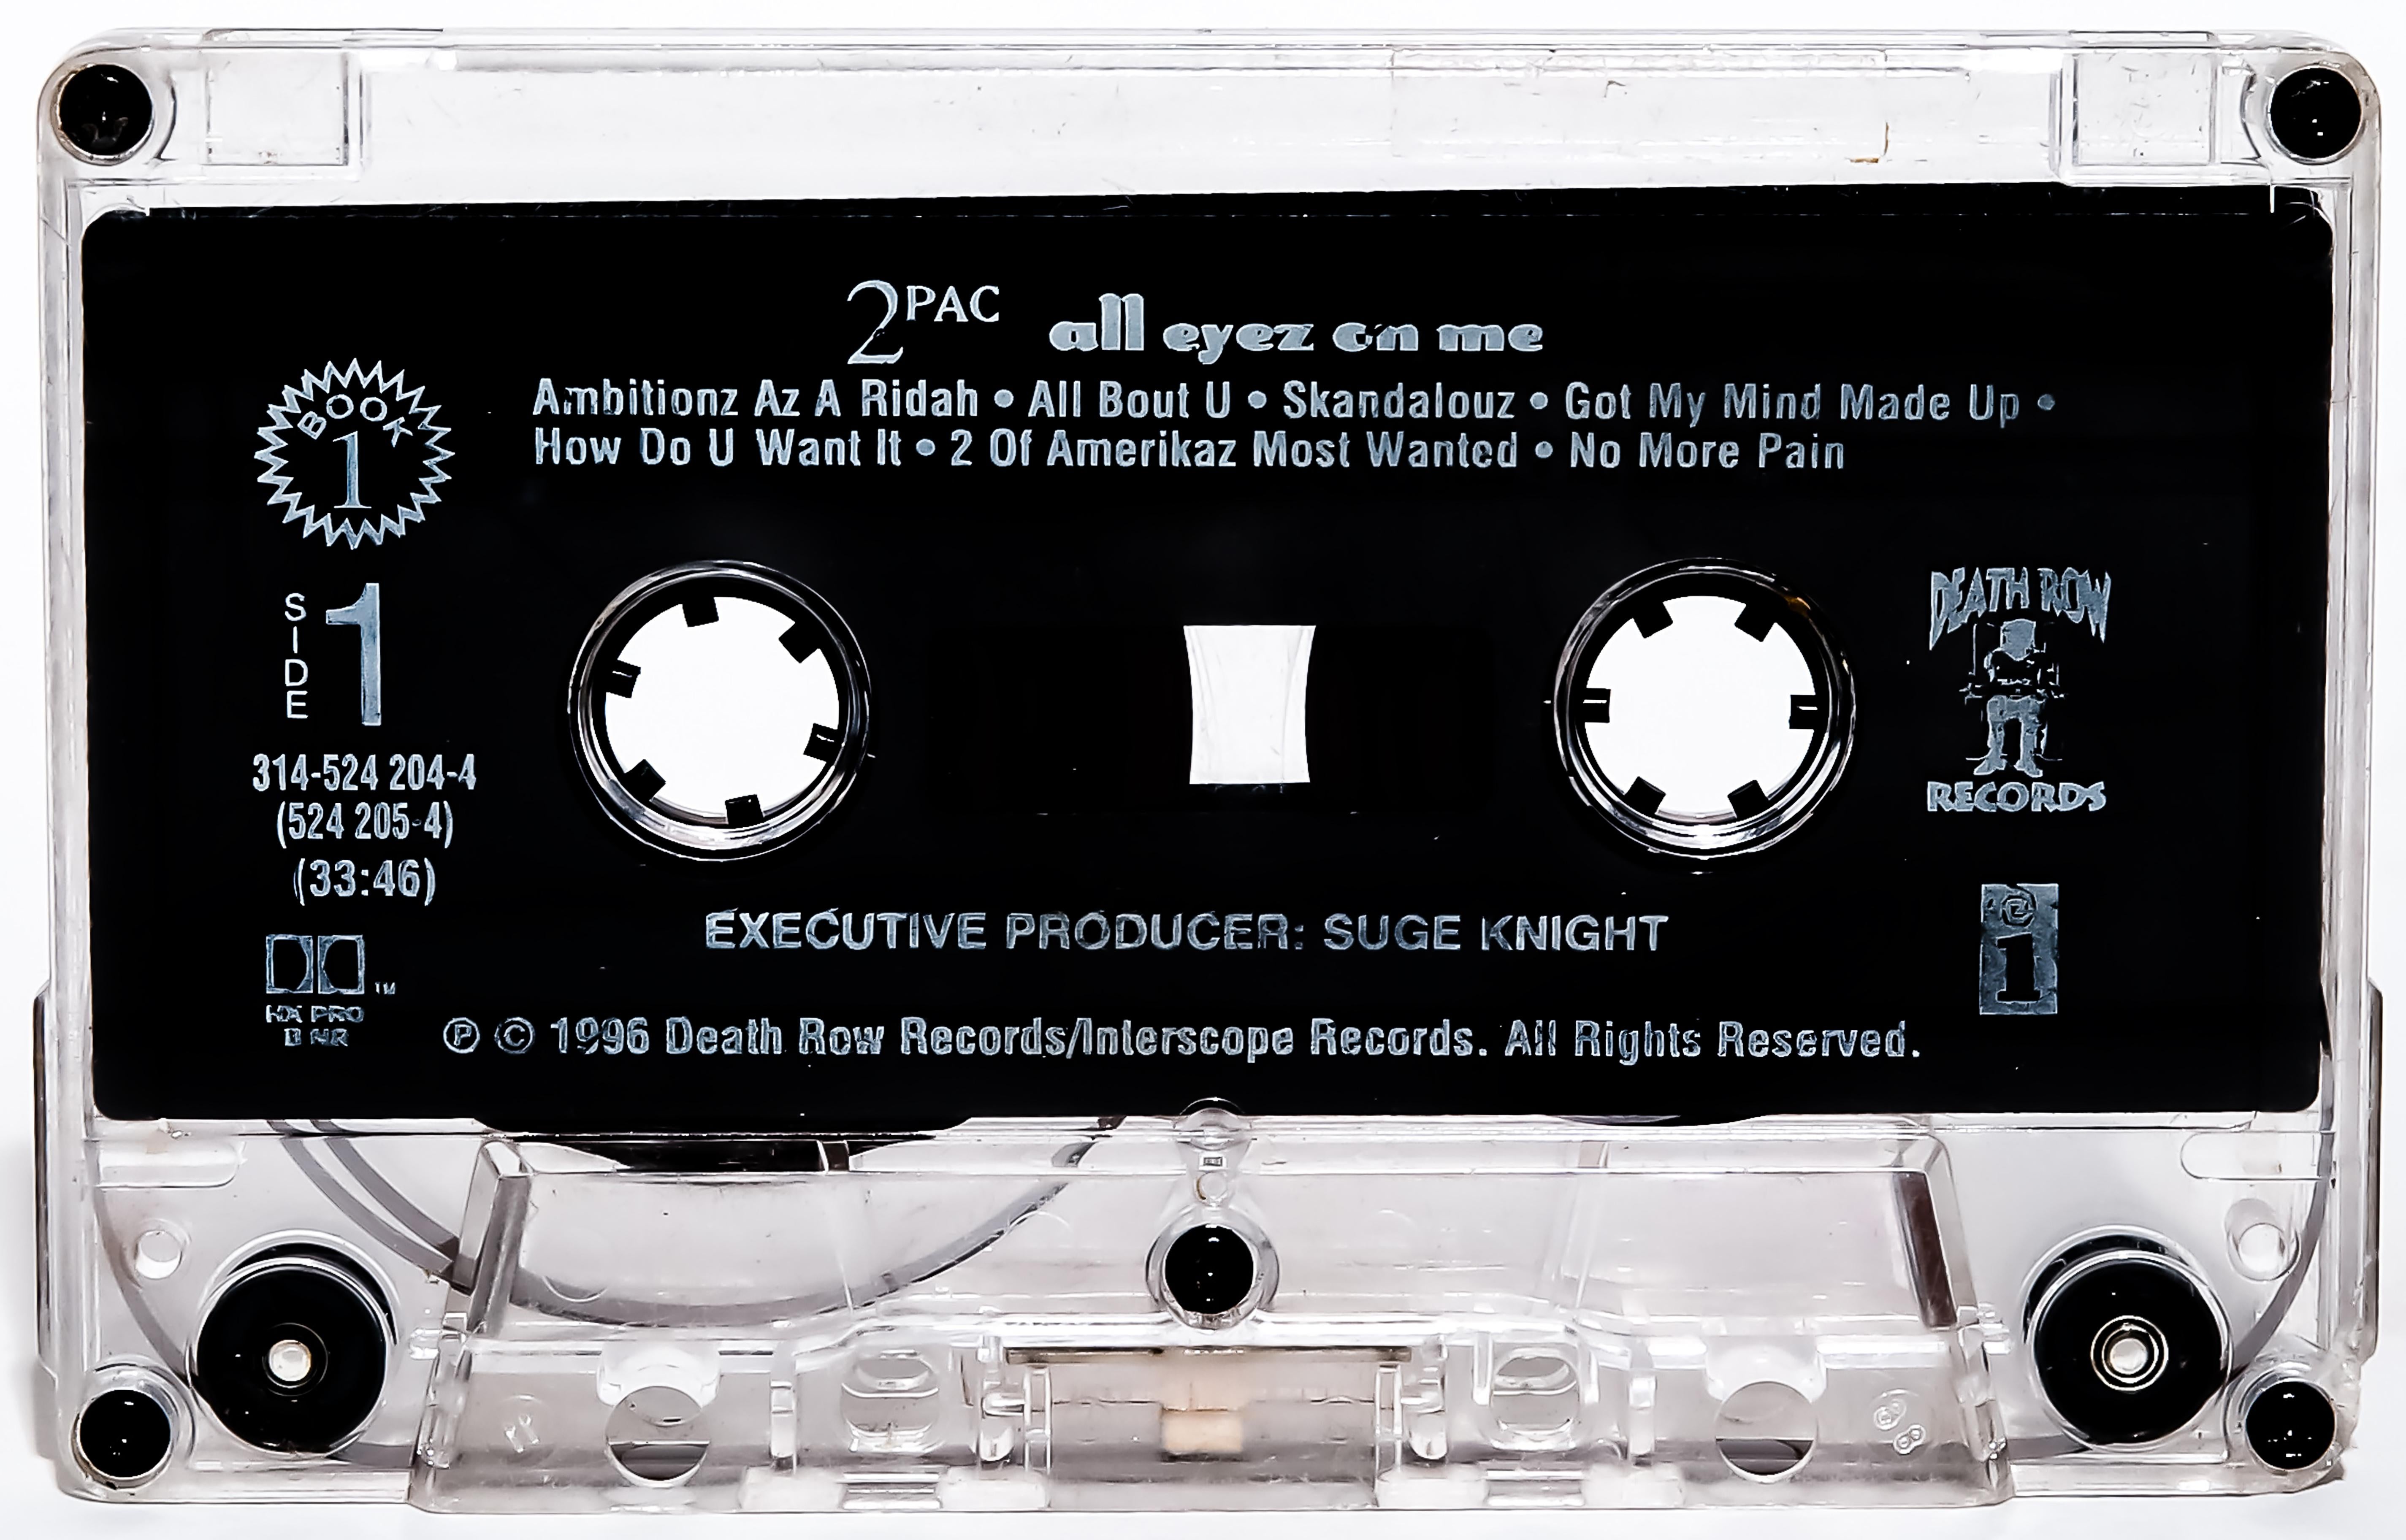 Tupac Shakur 2pac "All Eyez On Me" Cassette Photography 40x60 Pop Art by Destro